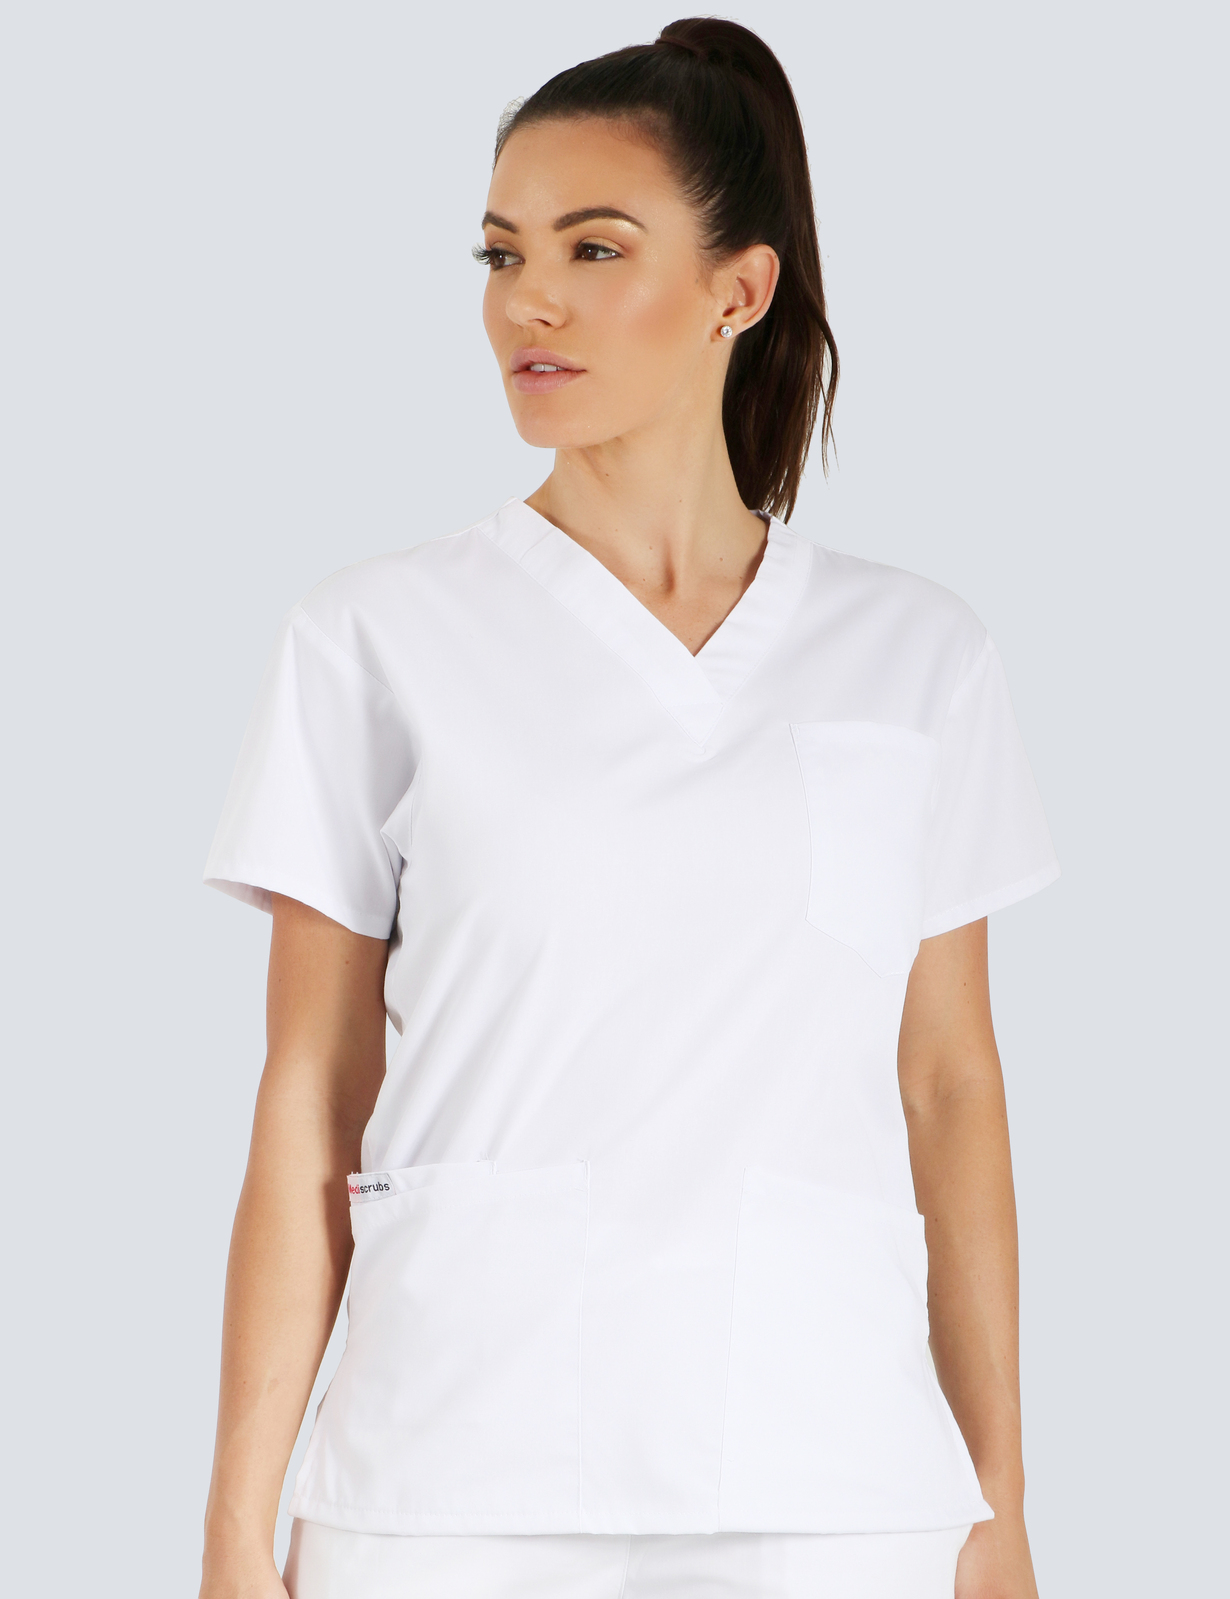 Queensland Children's Hospital Emergency Department Registrar Uniform Top Bundle  (4 Pocket Top in White  incl Logos)